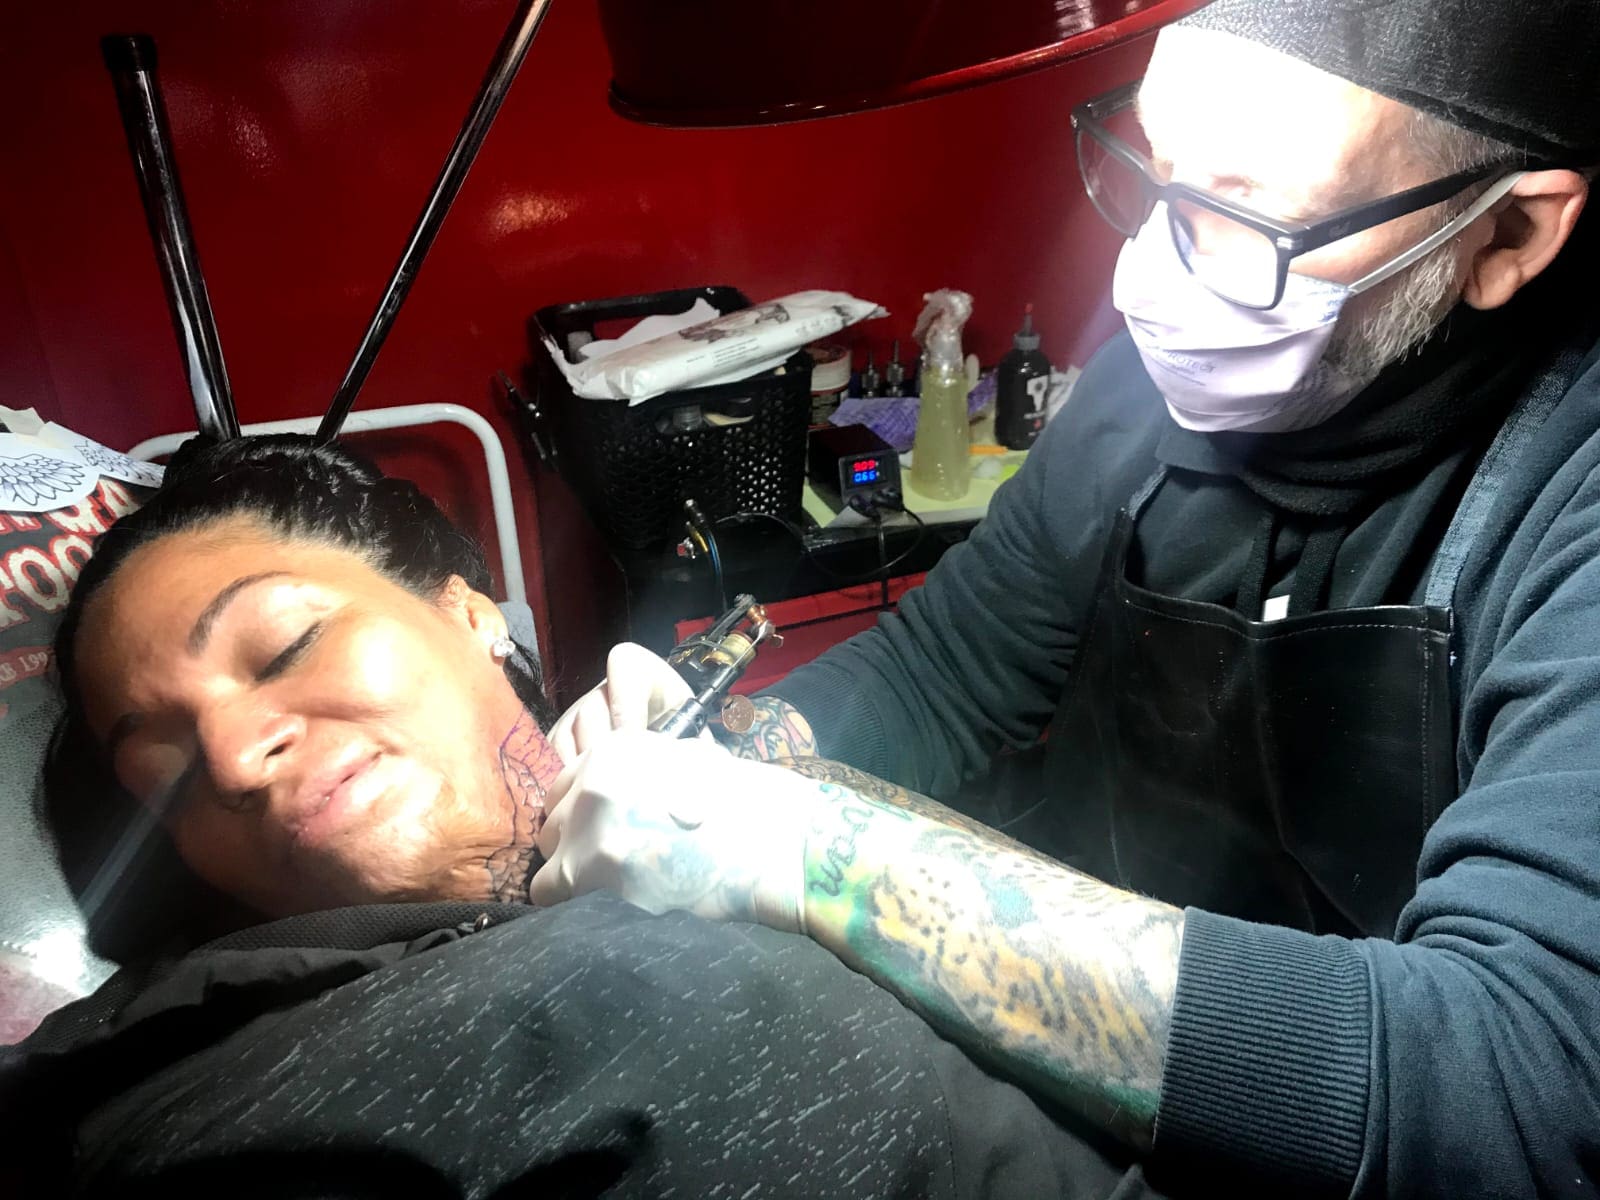 Tattoo artist Diego Staropoli, founder of Mandinga Tattoo, has been providing healing tattoos for nearly 15 years